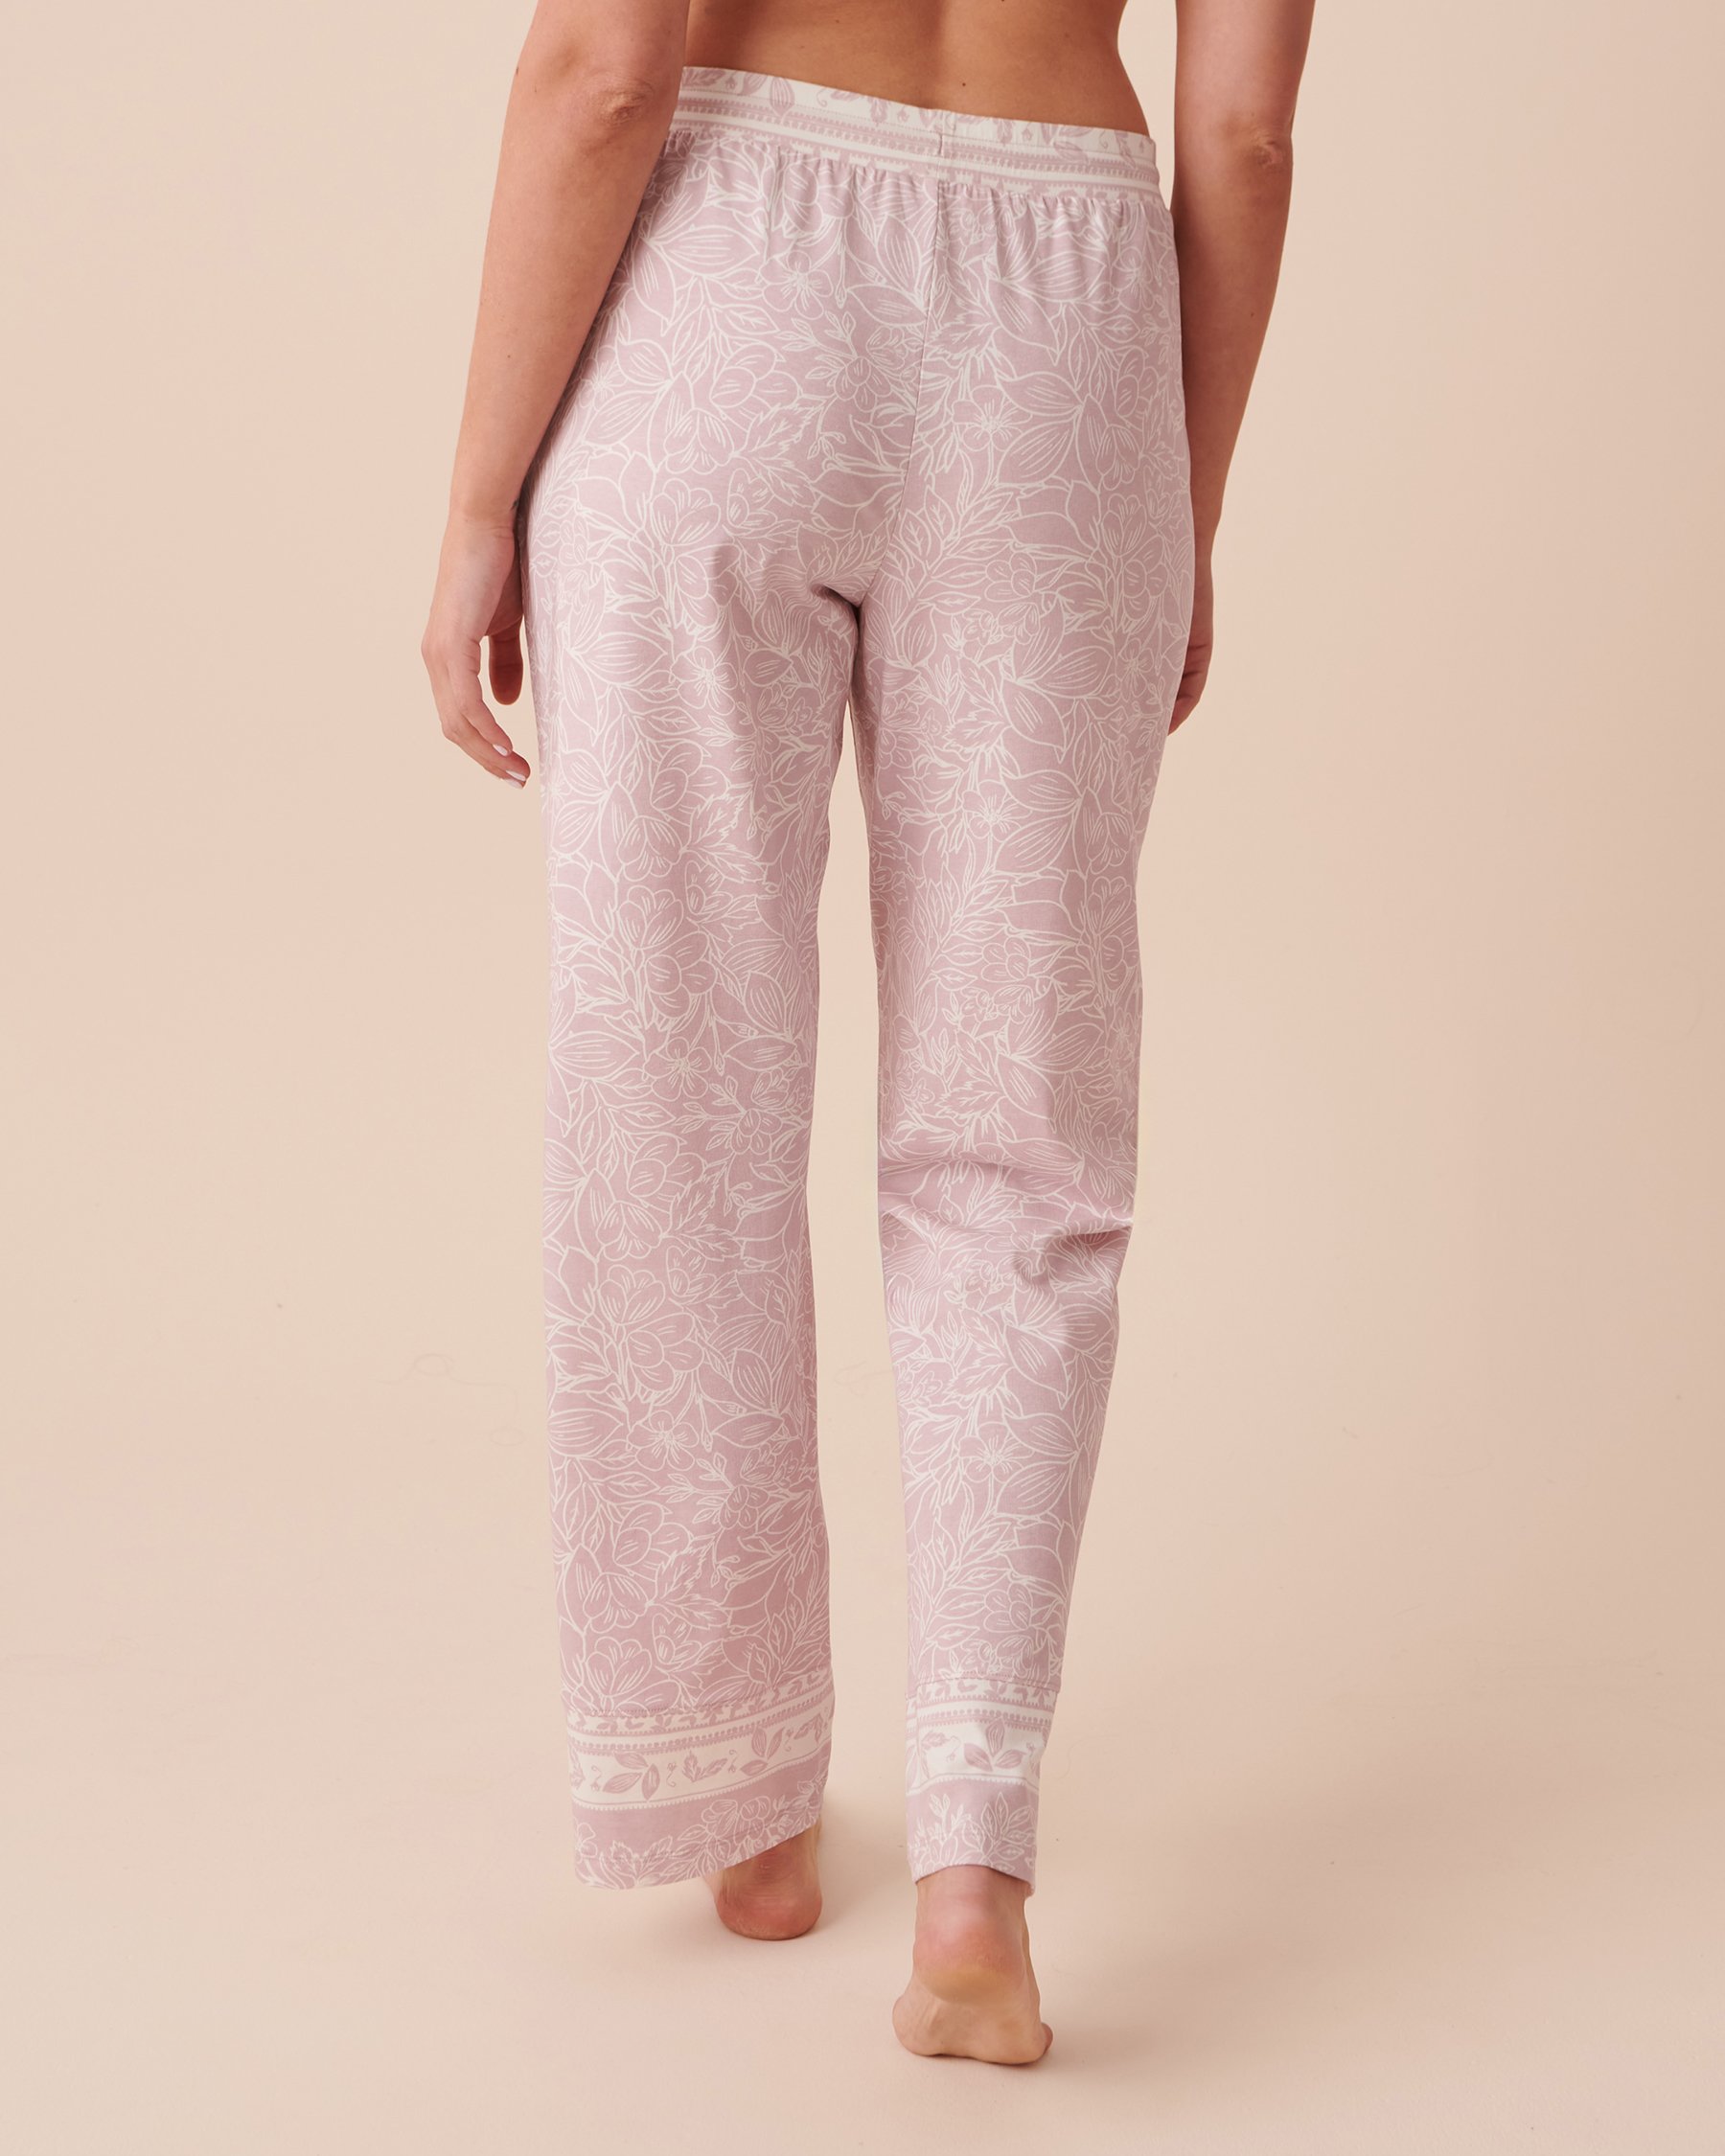 Lumento Women Comfy Sleepwear Pajama Shorts Casual Mid Waist Camo Lounge  Shorts PJ Sleep Bottom Shorts S-XXL Dark Gray S(US 4-6)